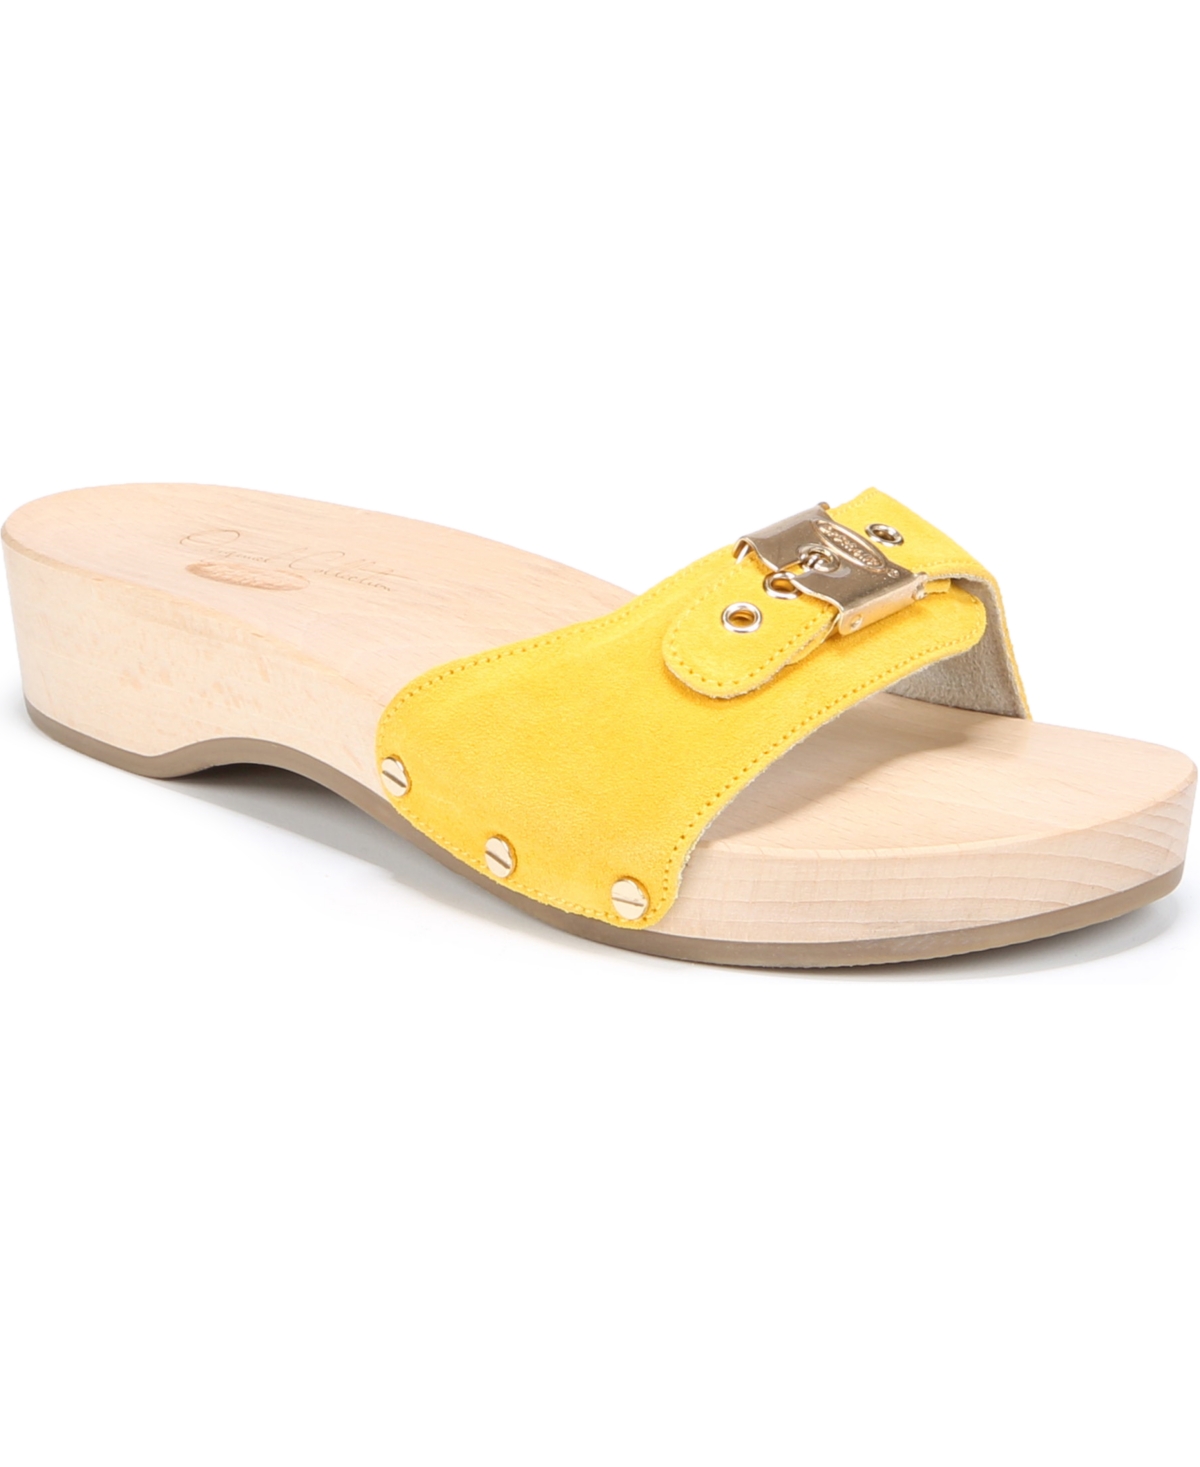 Dr. Scholl's Original Collection Women's Original Slide Sandals In Yellow Suede